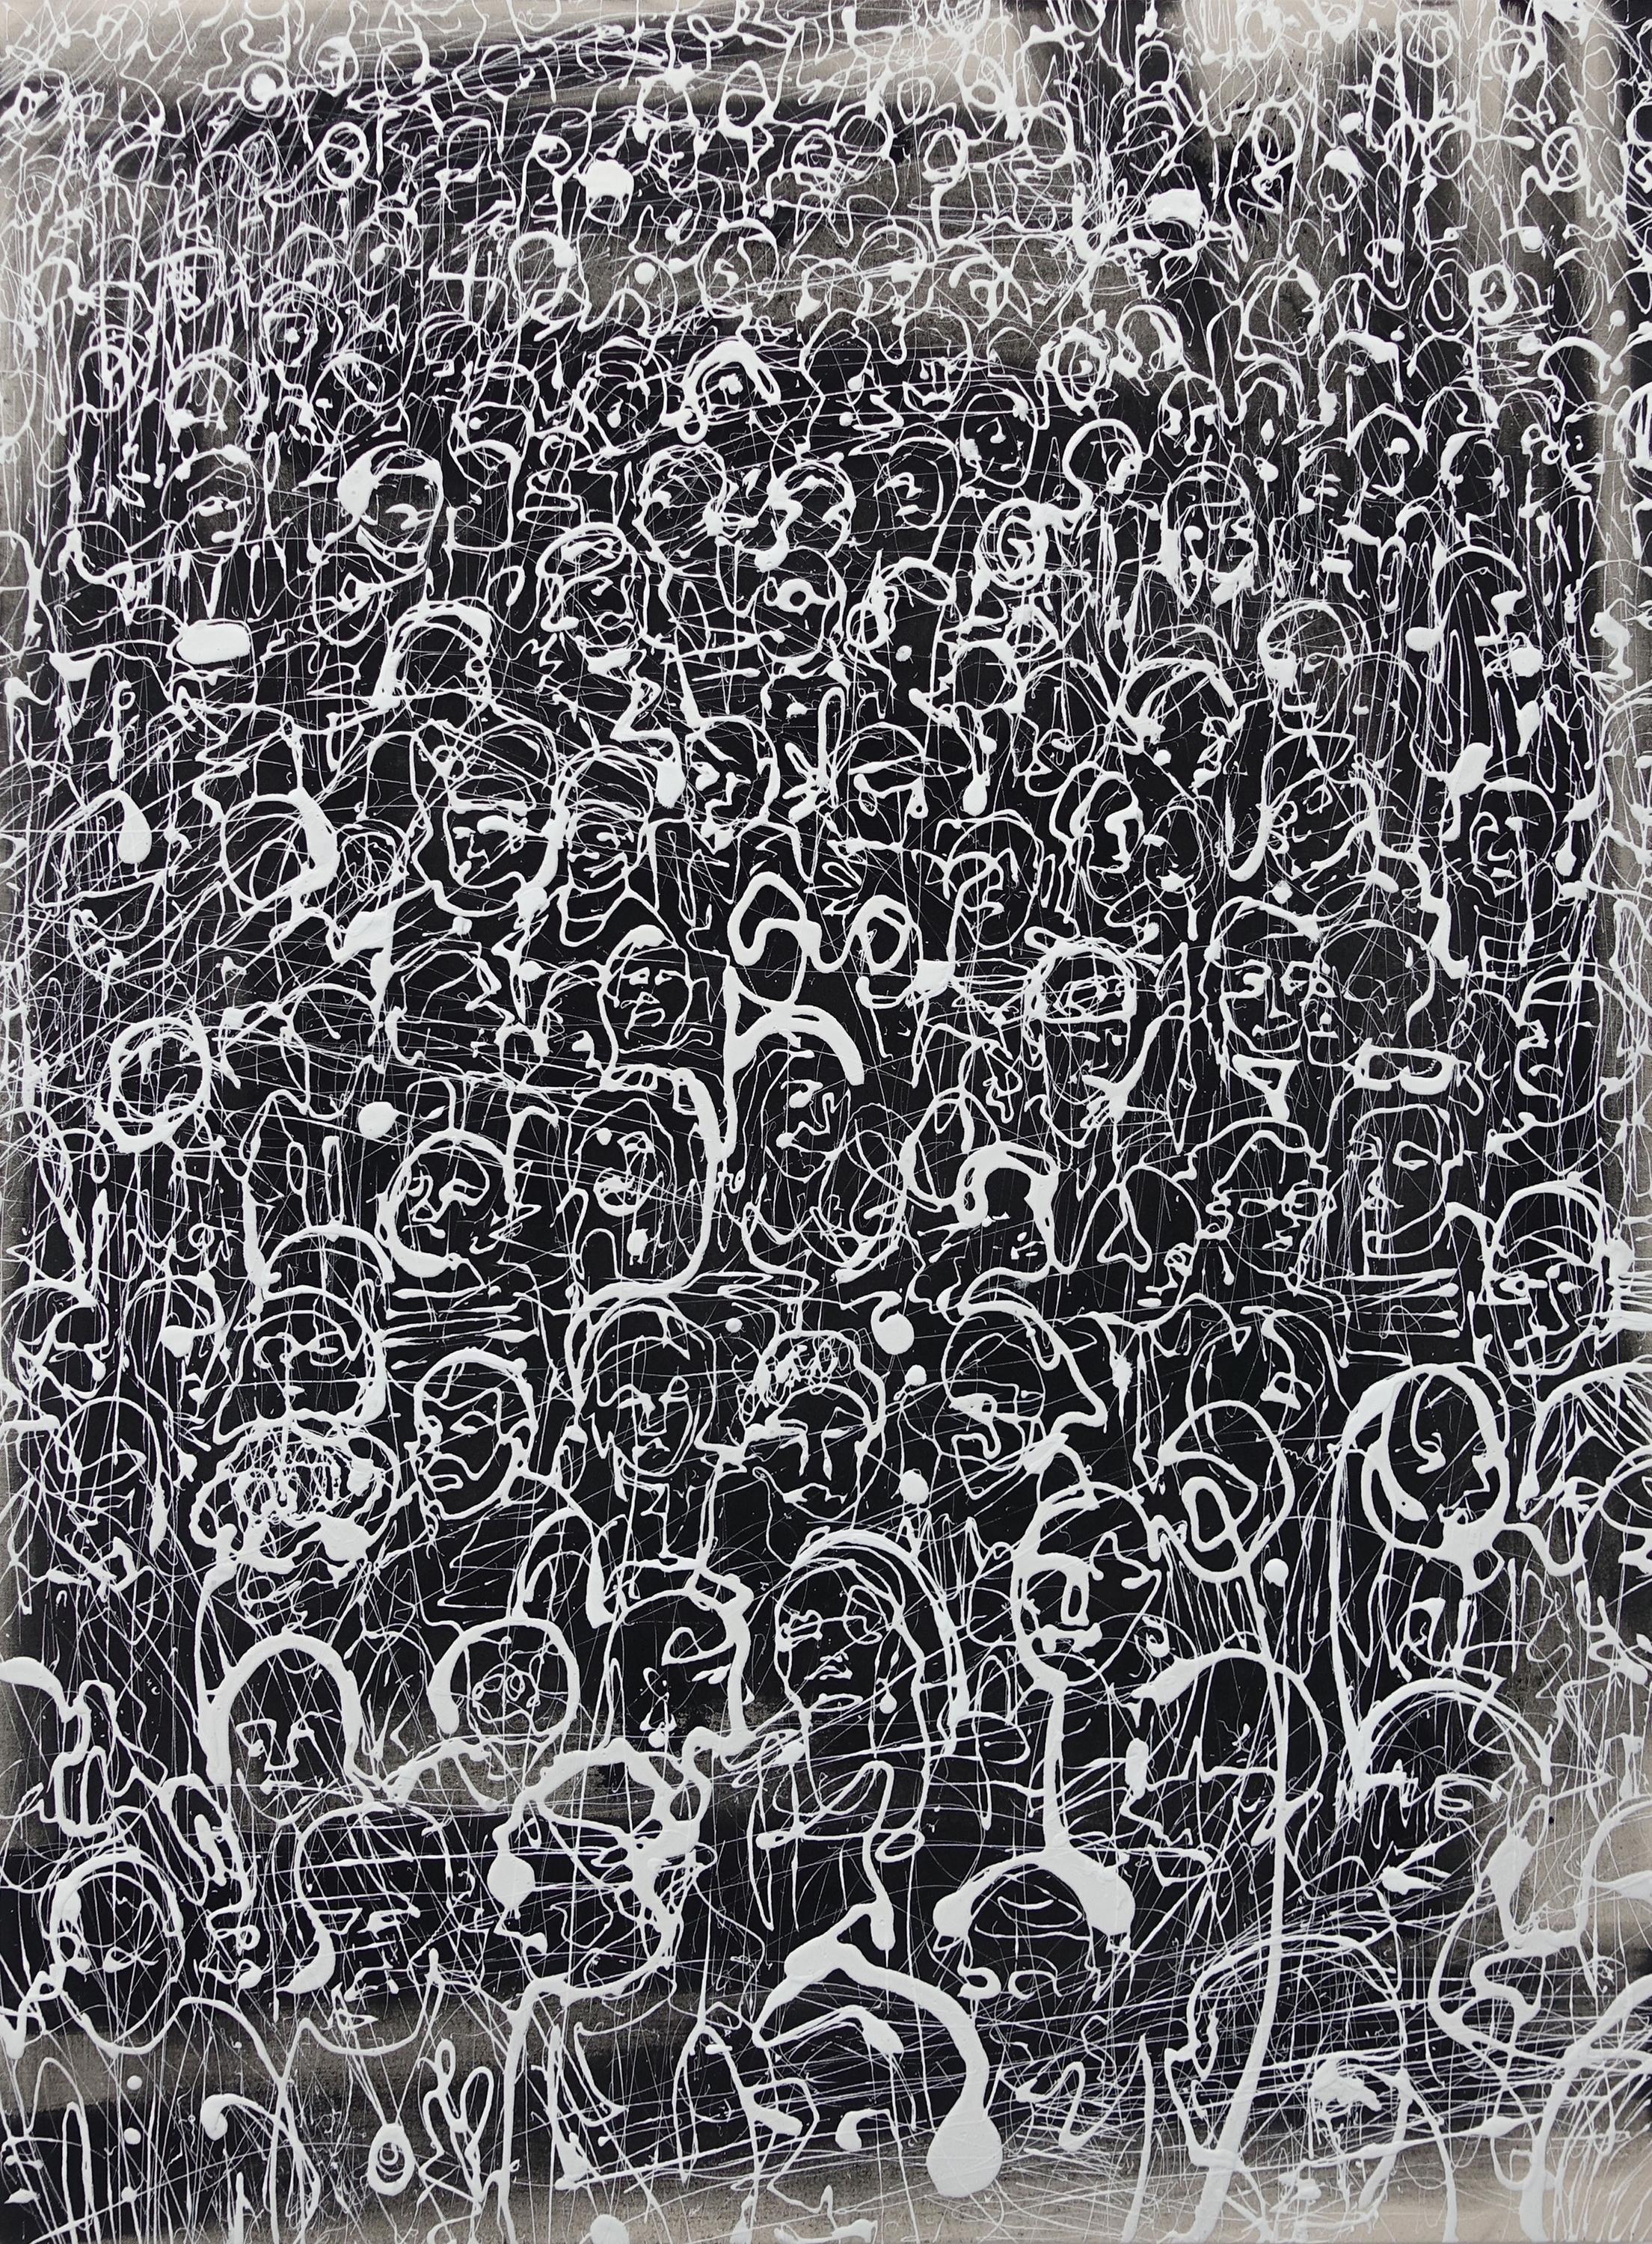 "Thread" - black & white - abstract figurative work - crowd - Pollock